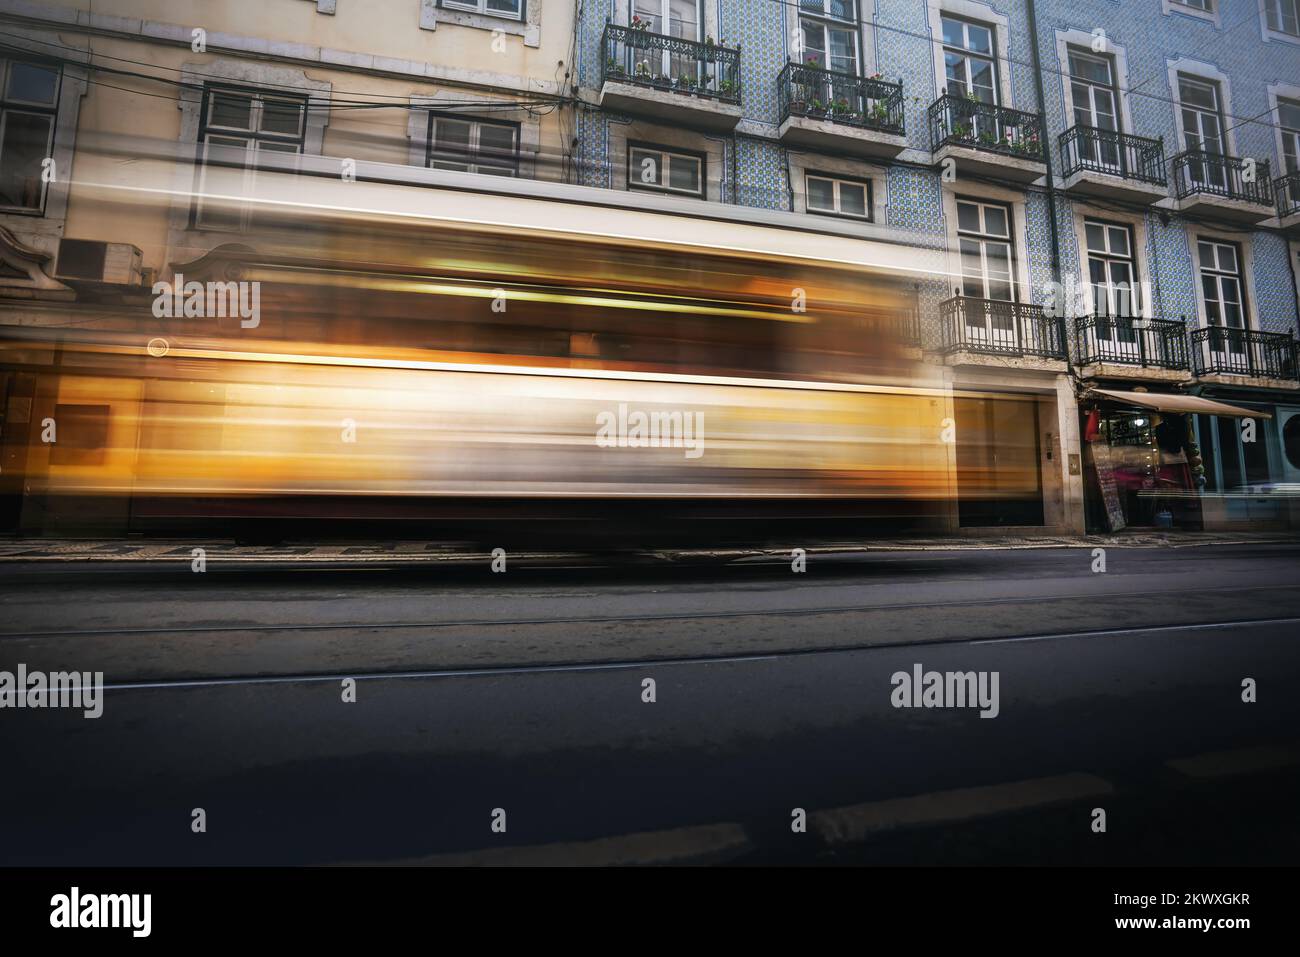 Tranvía amarillo en una calle de Lisboa - Lisboa, Portugal Foto de stock